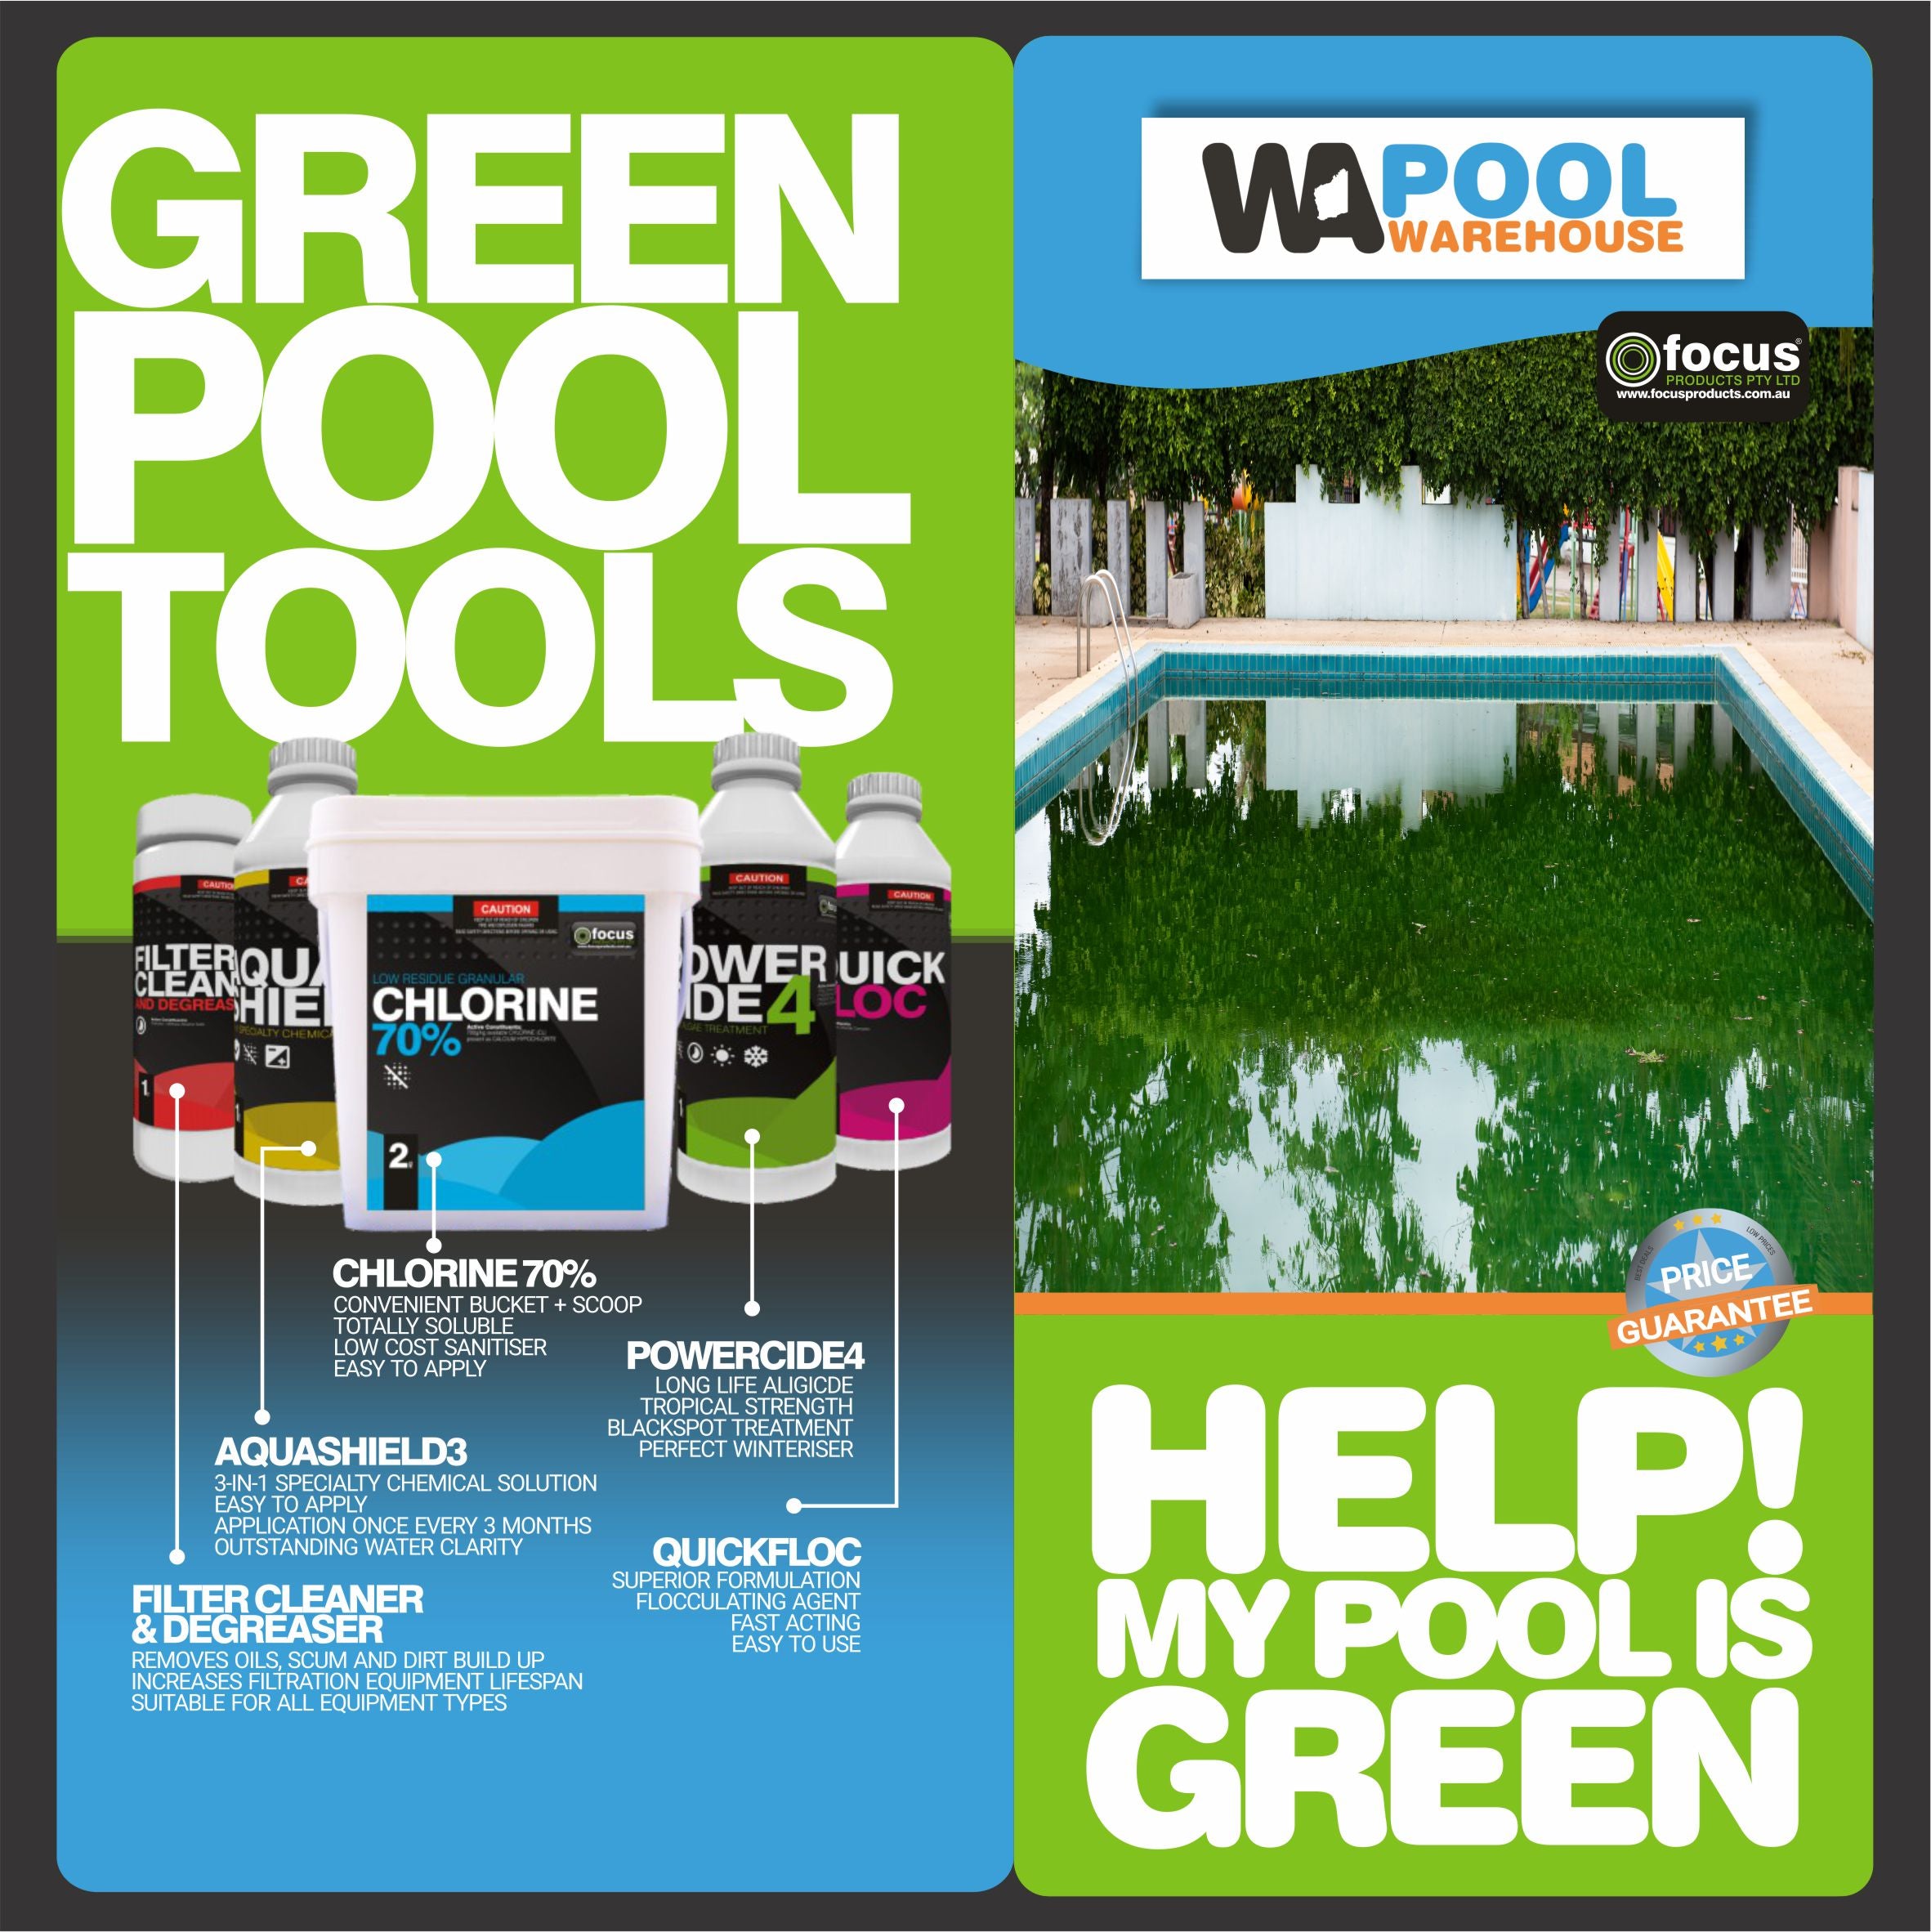 Help! My pool is green!